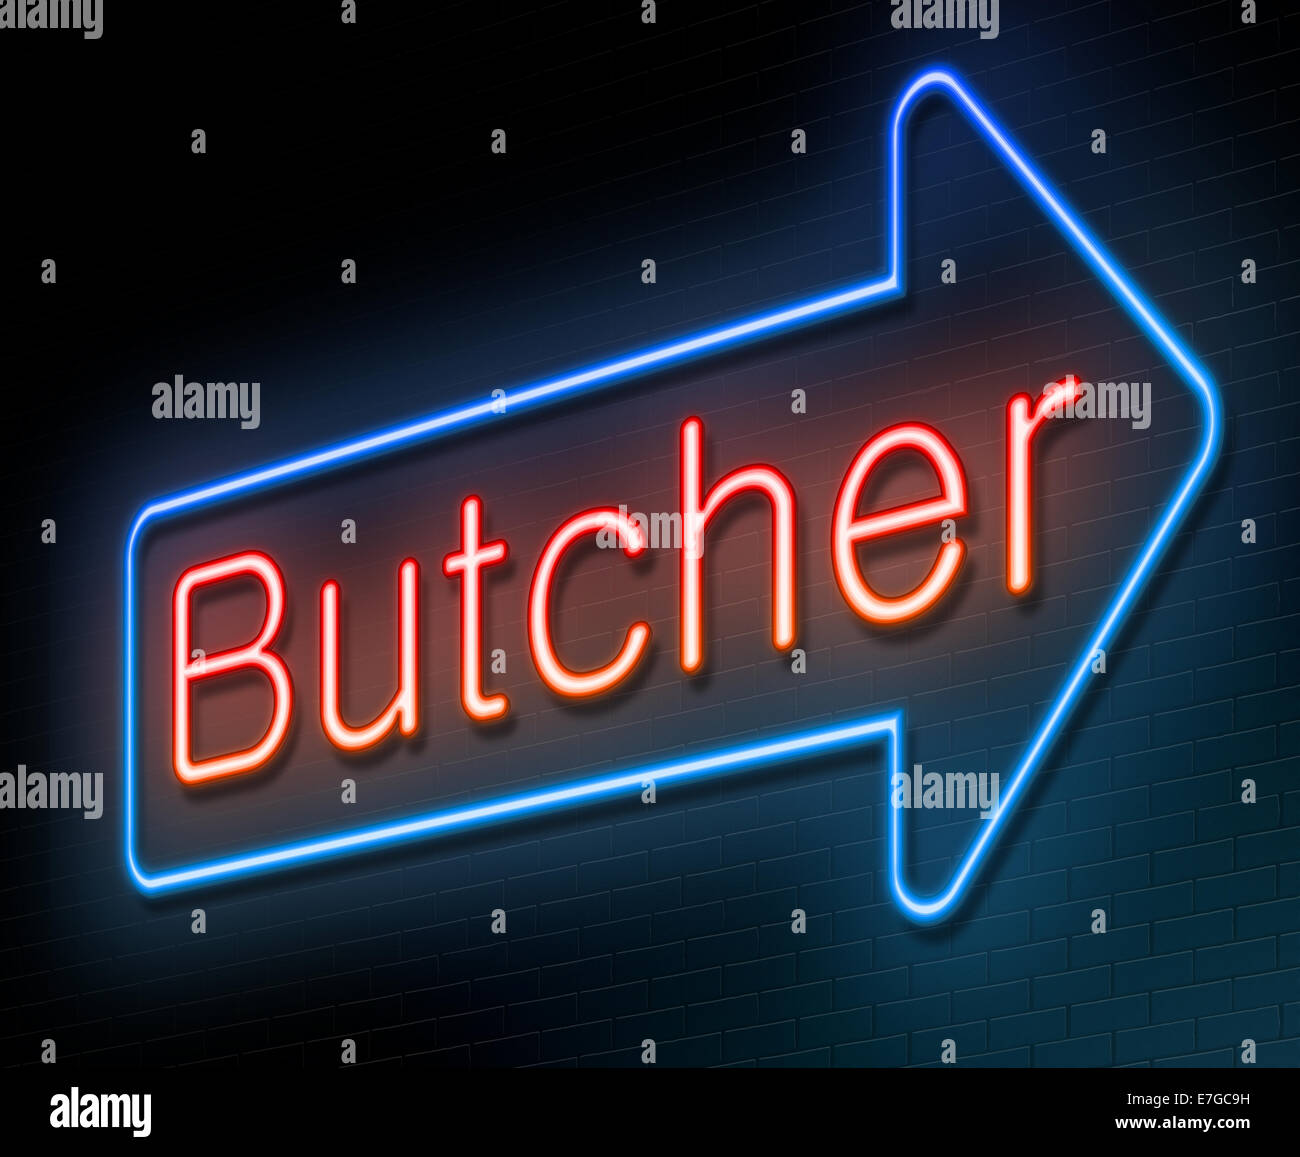 Butcher concept. Stock Photo